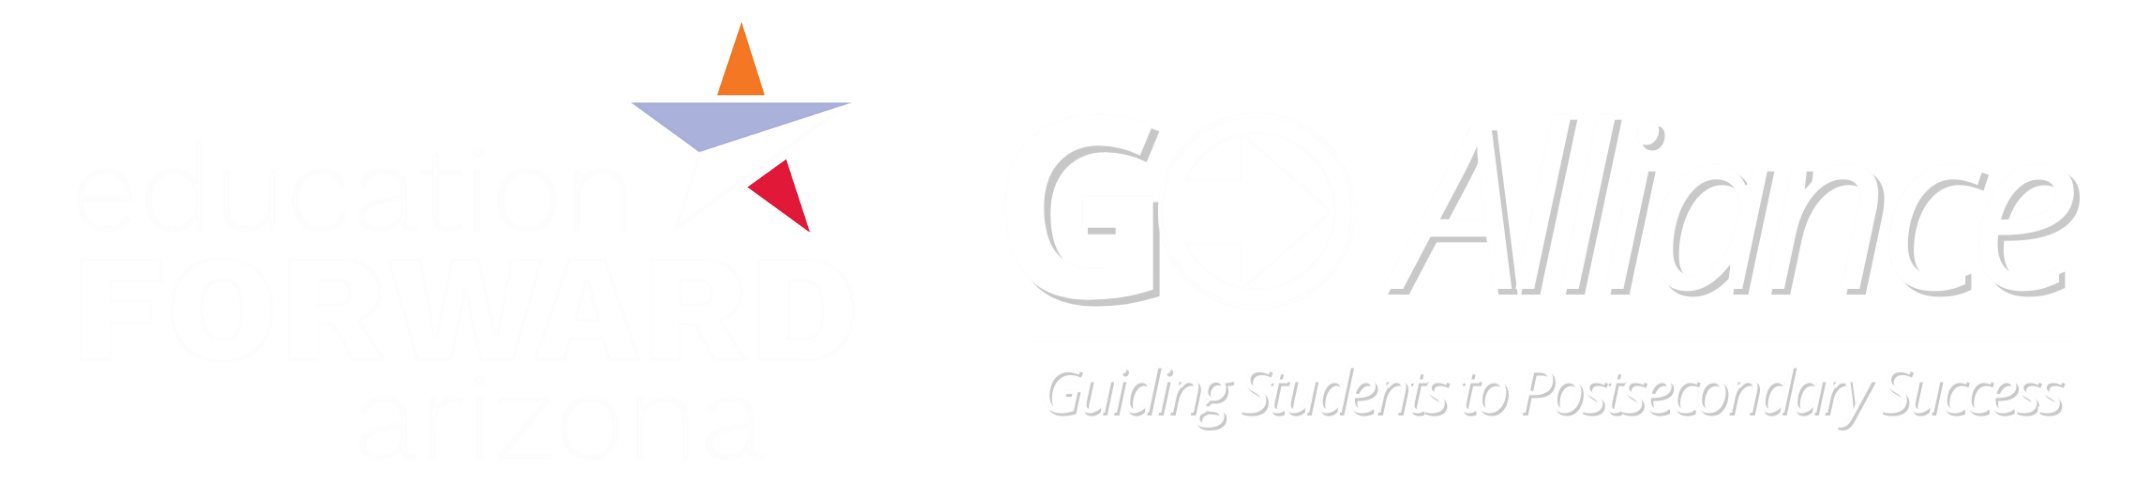 Education Forward Arizona and Go Alliance Logos